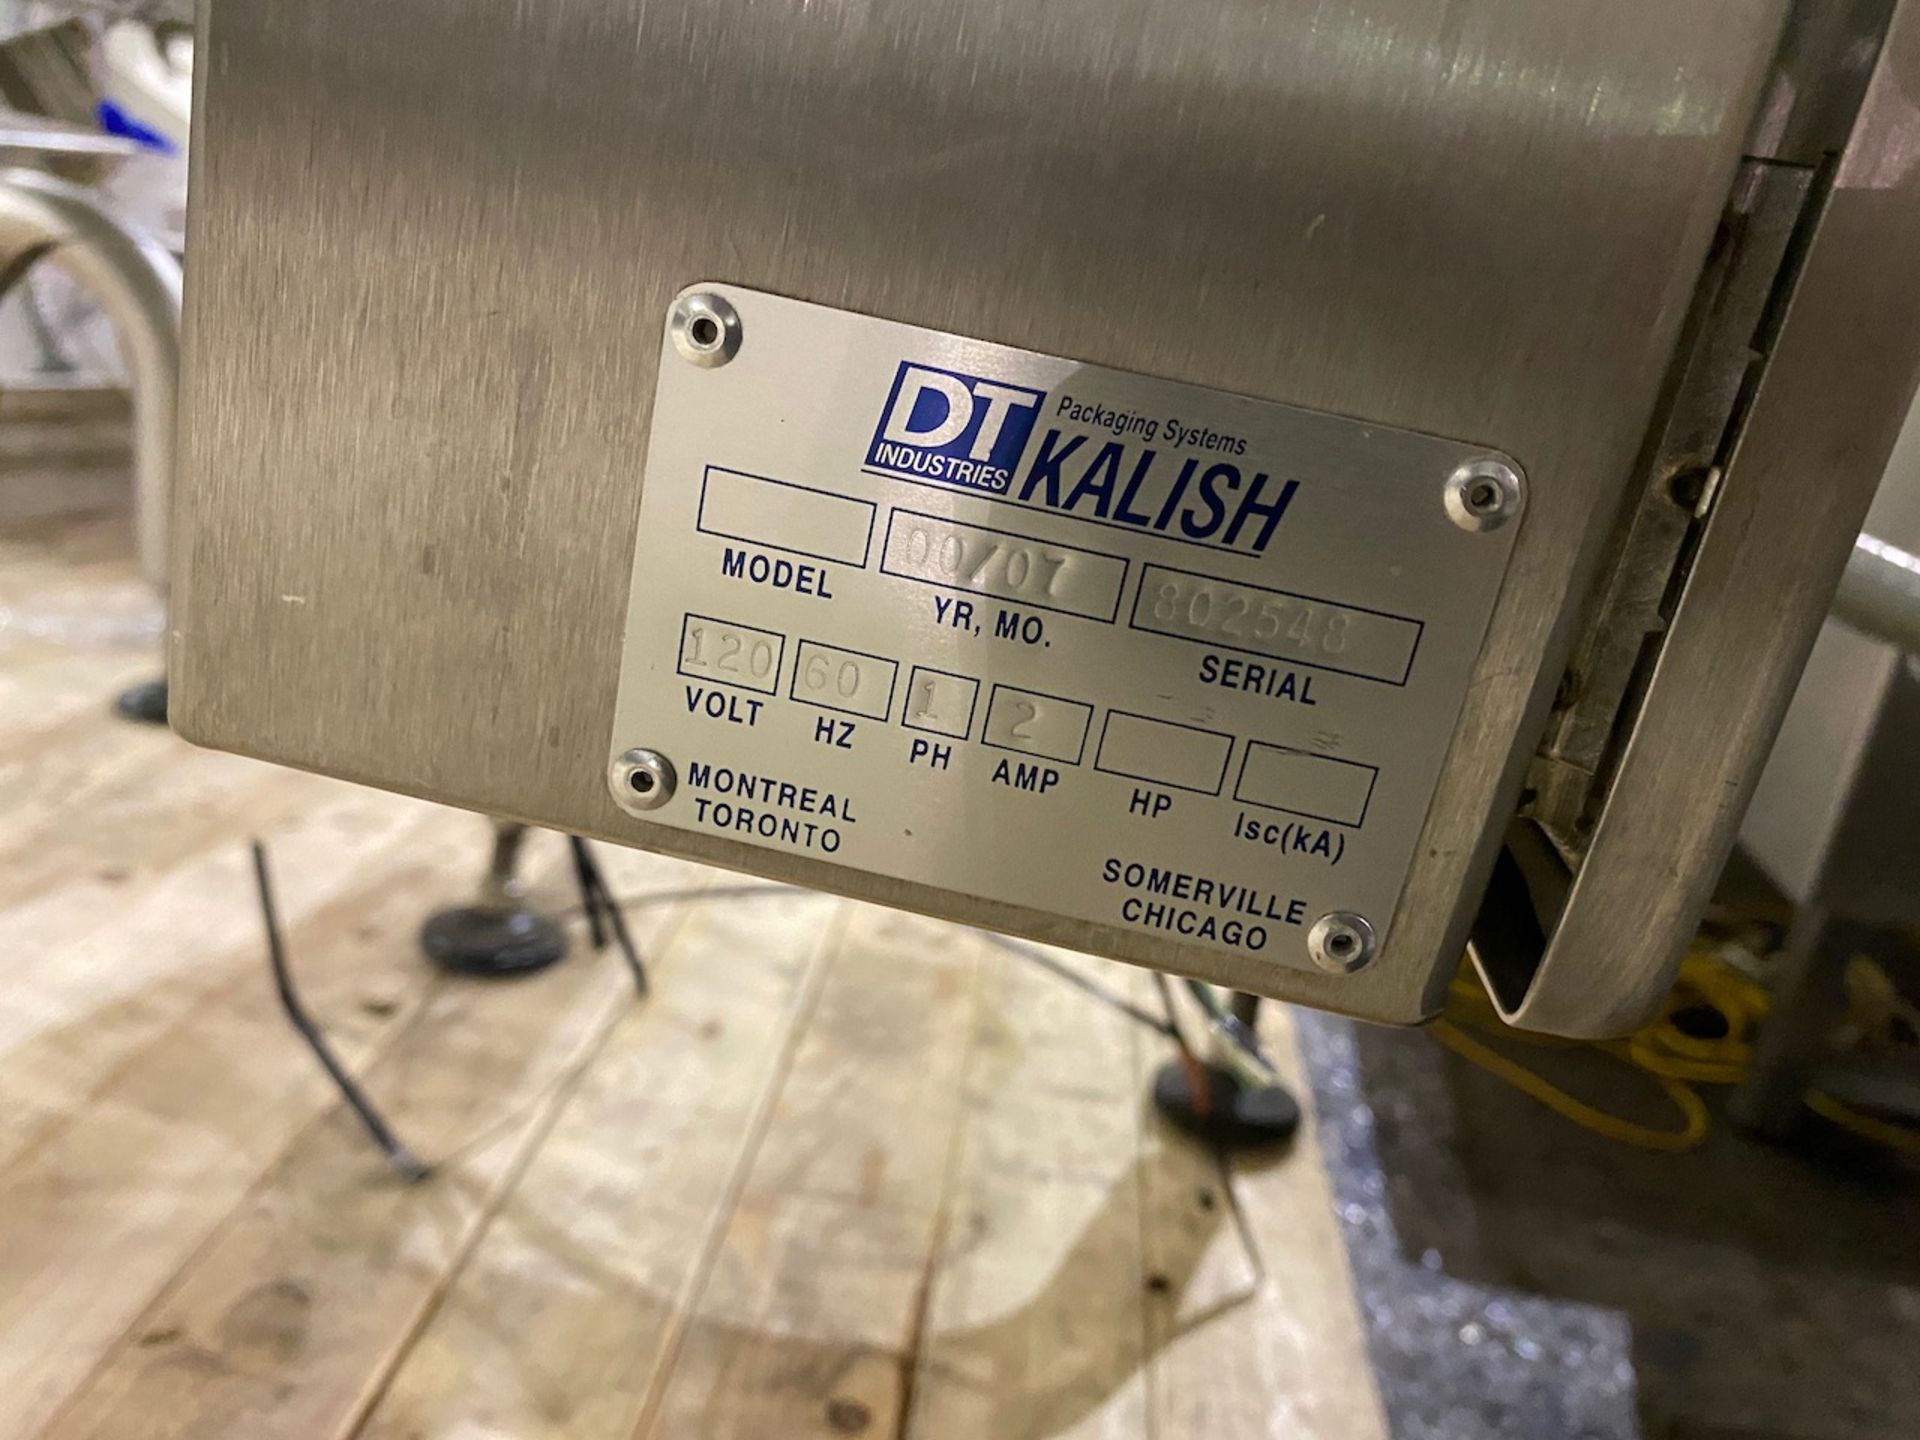 DT Industries Kalish Model 7140, 31' x 4" Conveyor - Image 17 of 17